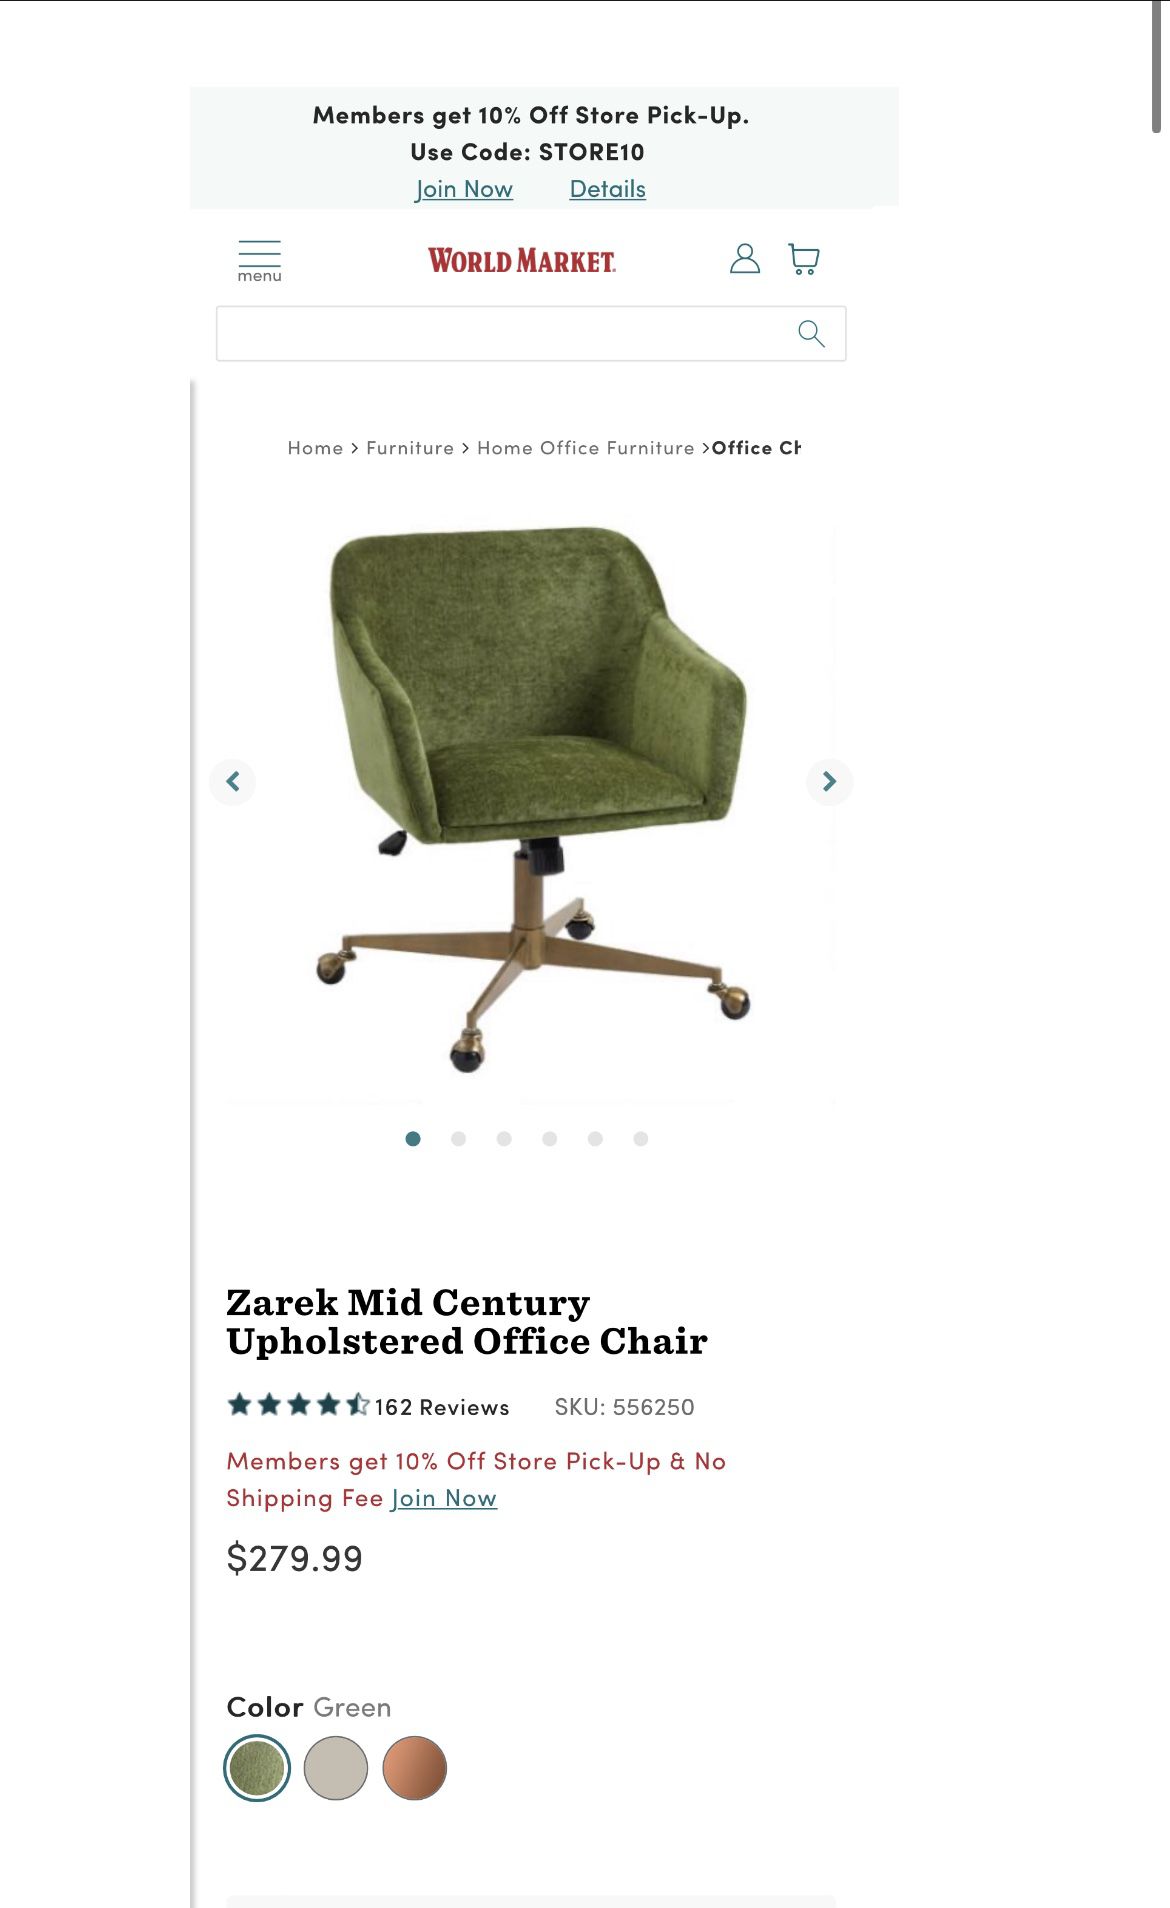 Zarek Mid Century Upholstered Office Chair by World Market